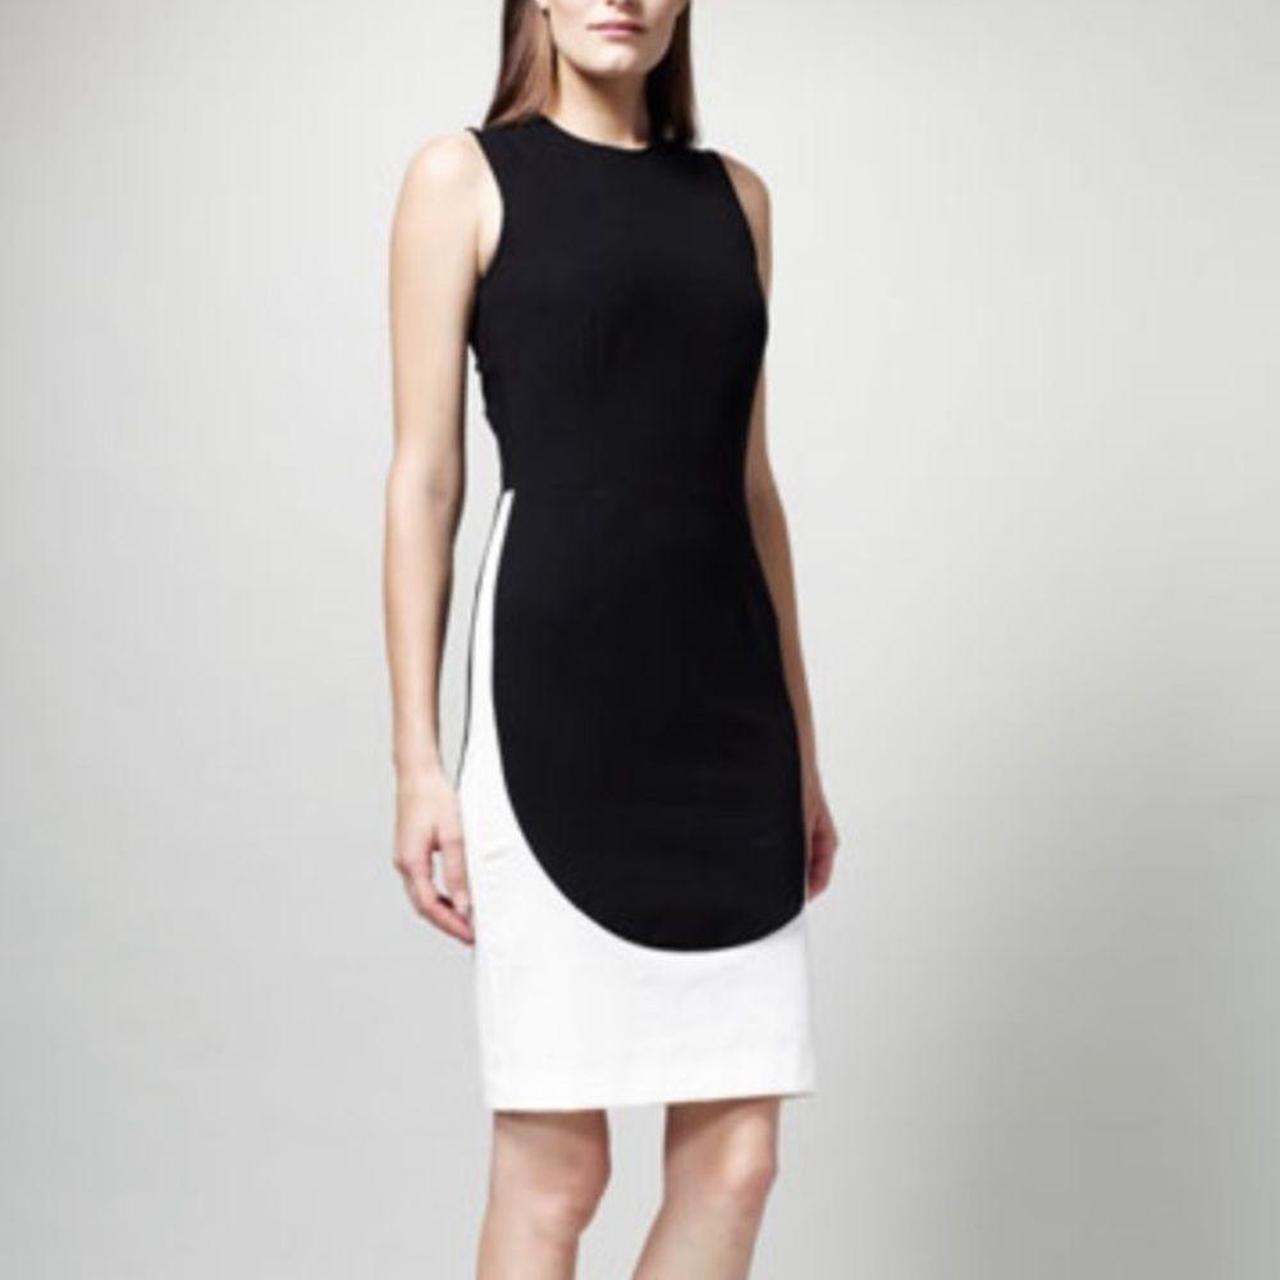 Stella McCartney Women's Black and White Dress (2)